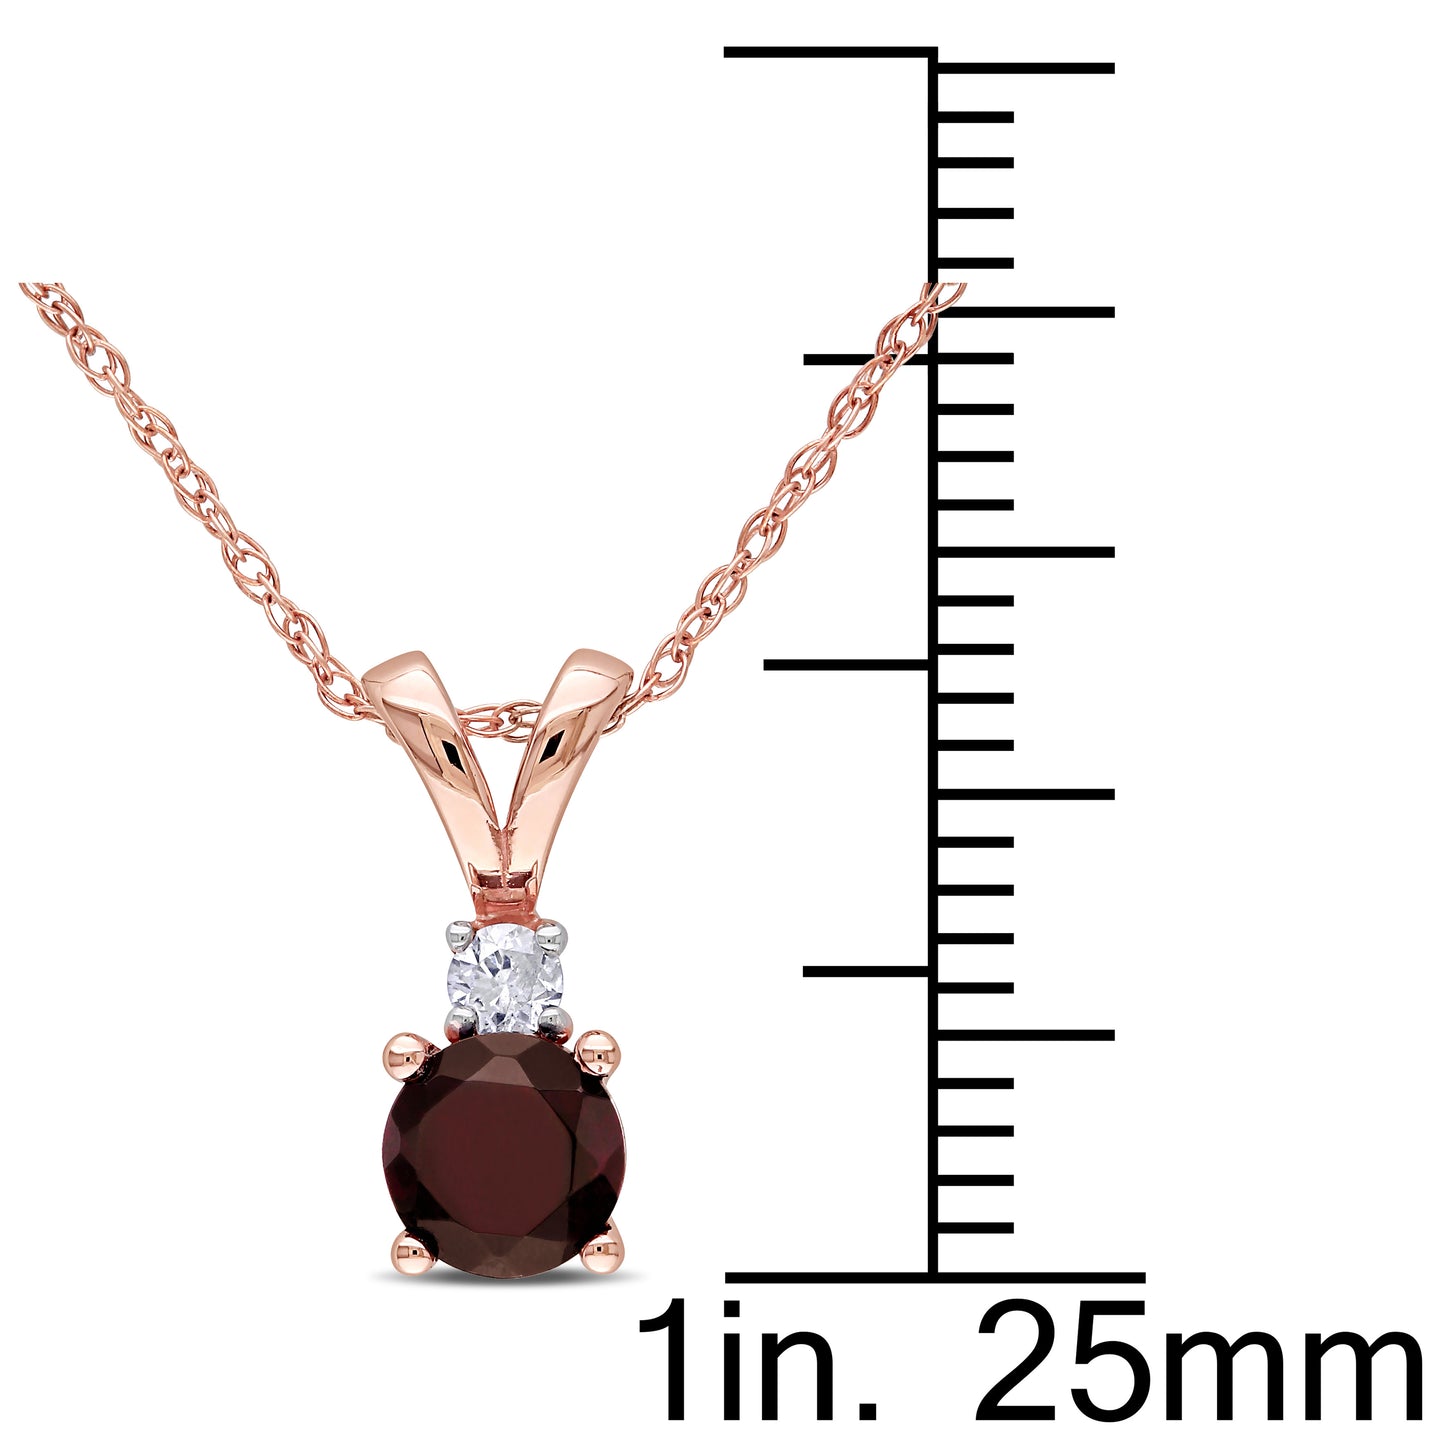 Garnet & Diamond Necklace in 10k Rose Gold